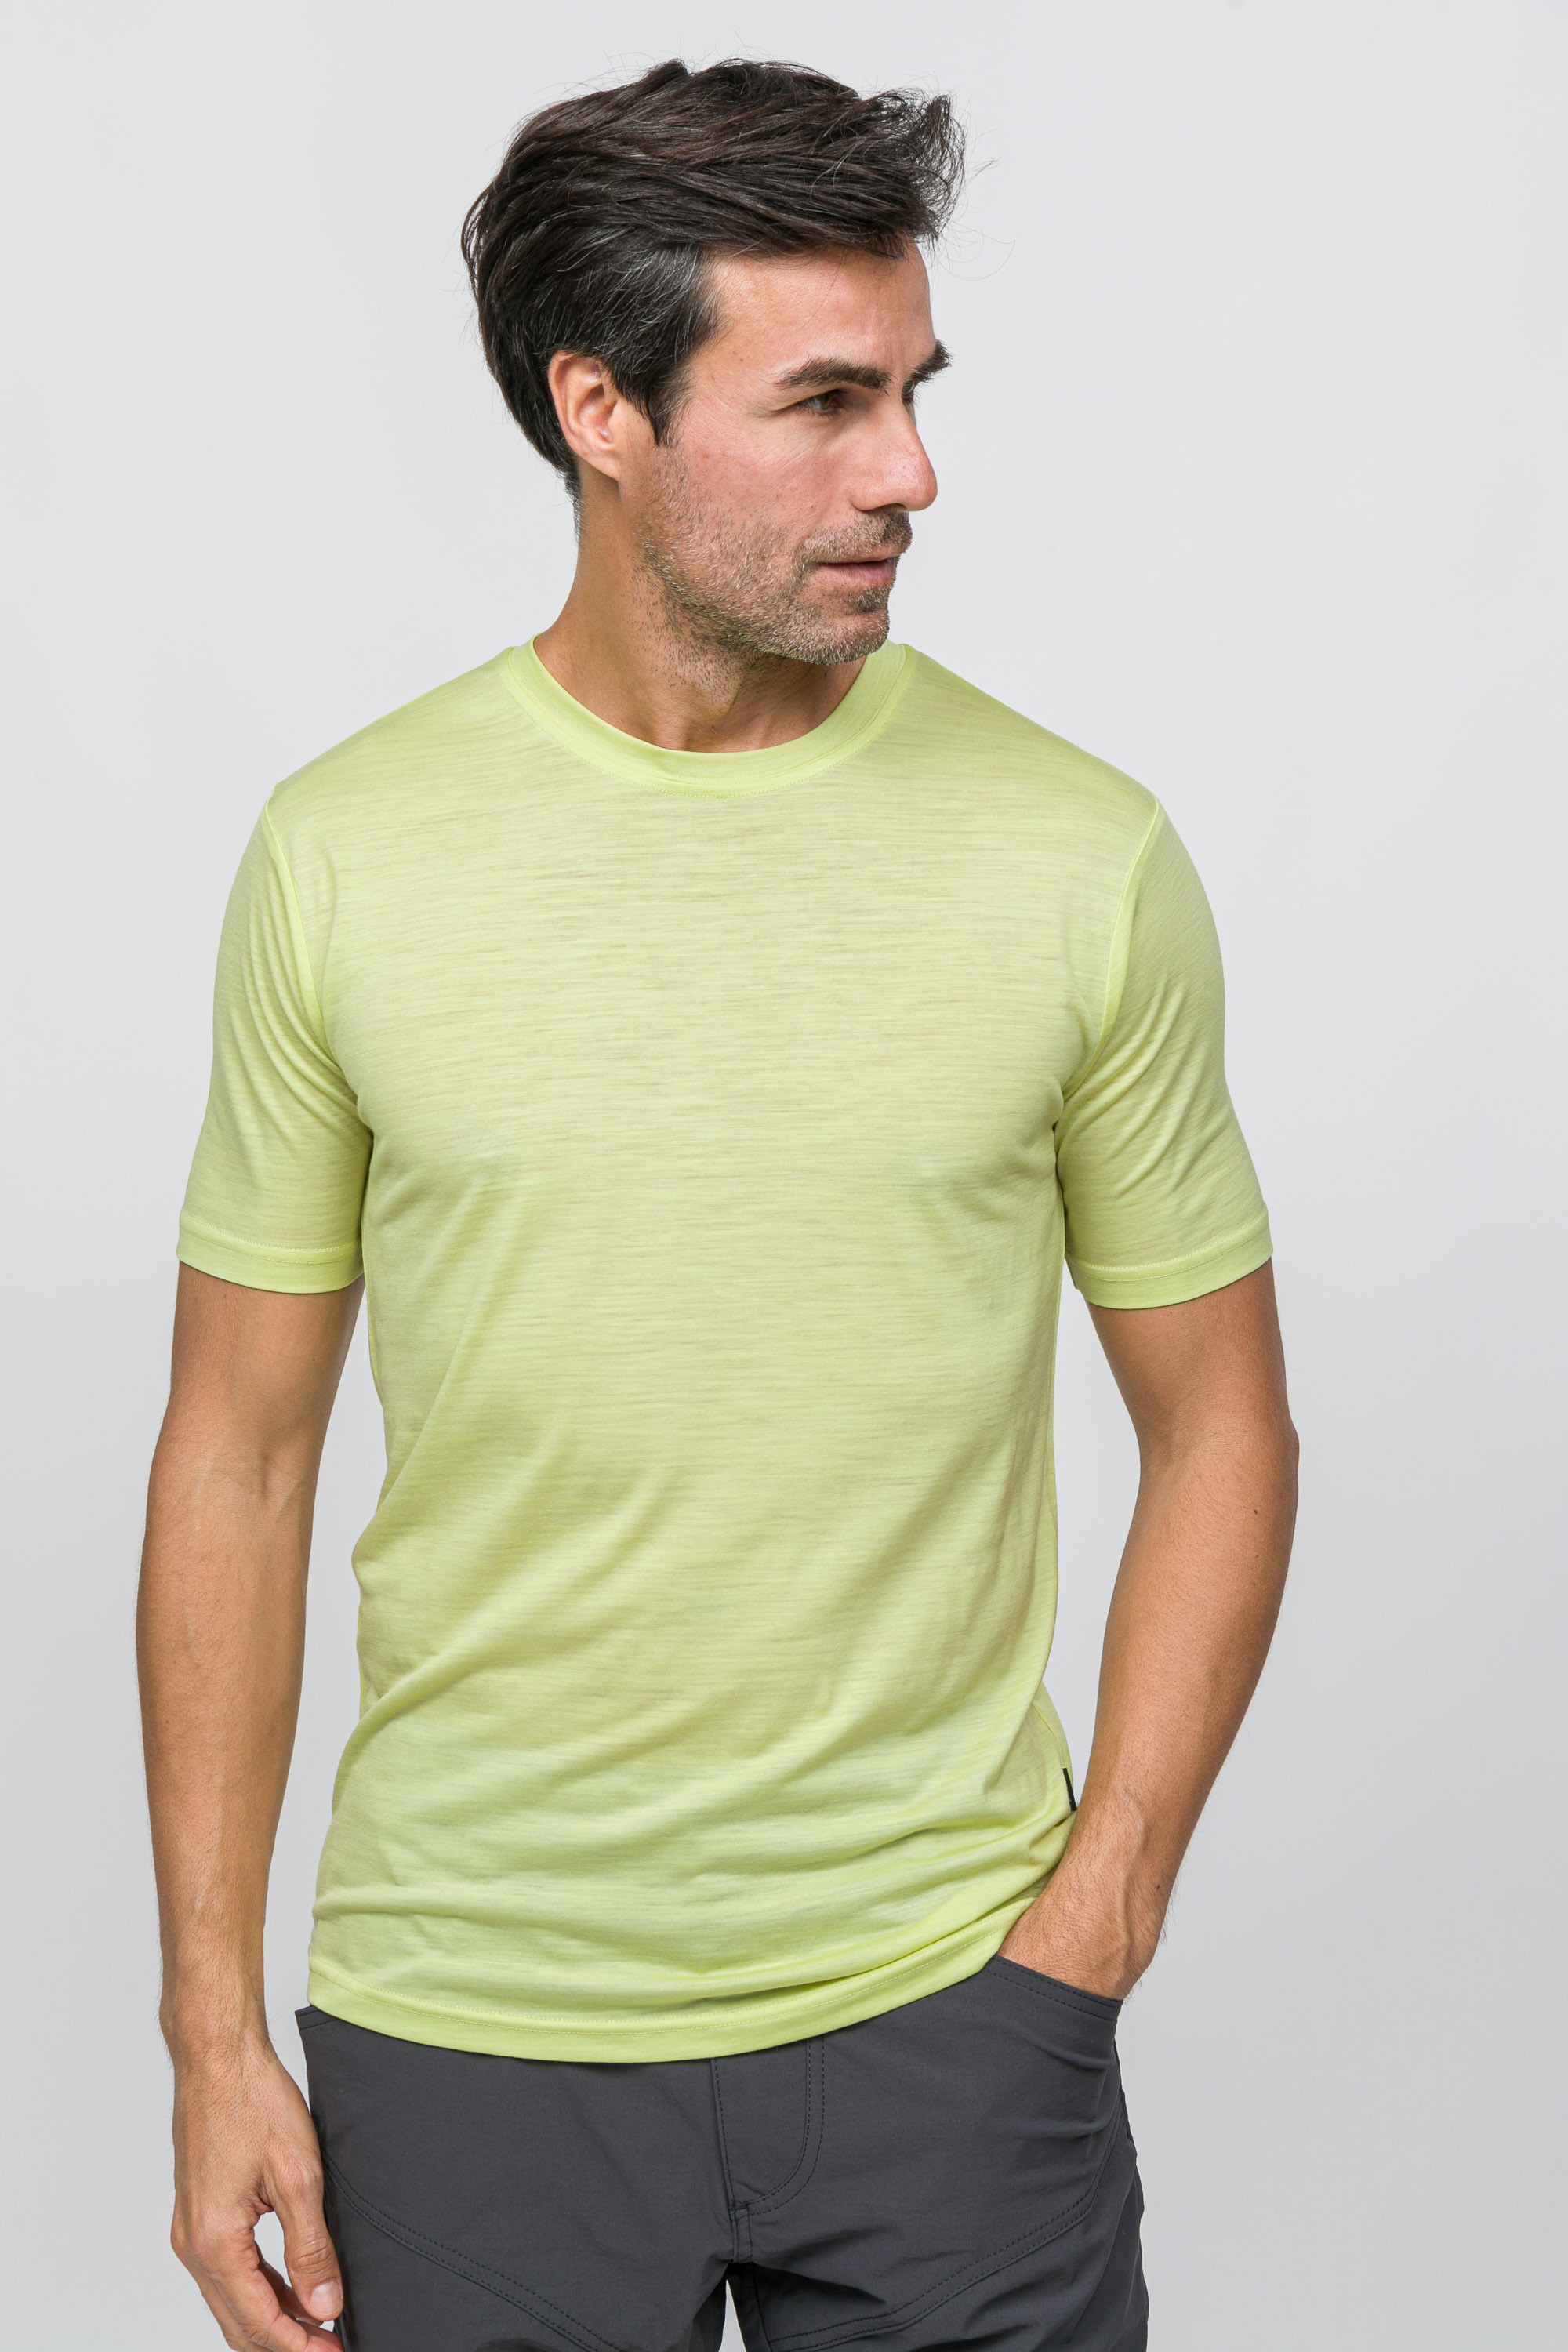 All-Season Merino T-shirt 135 gr - Lime